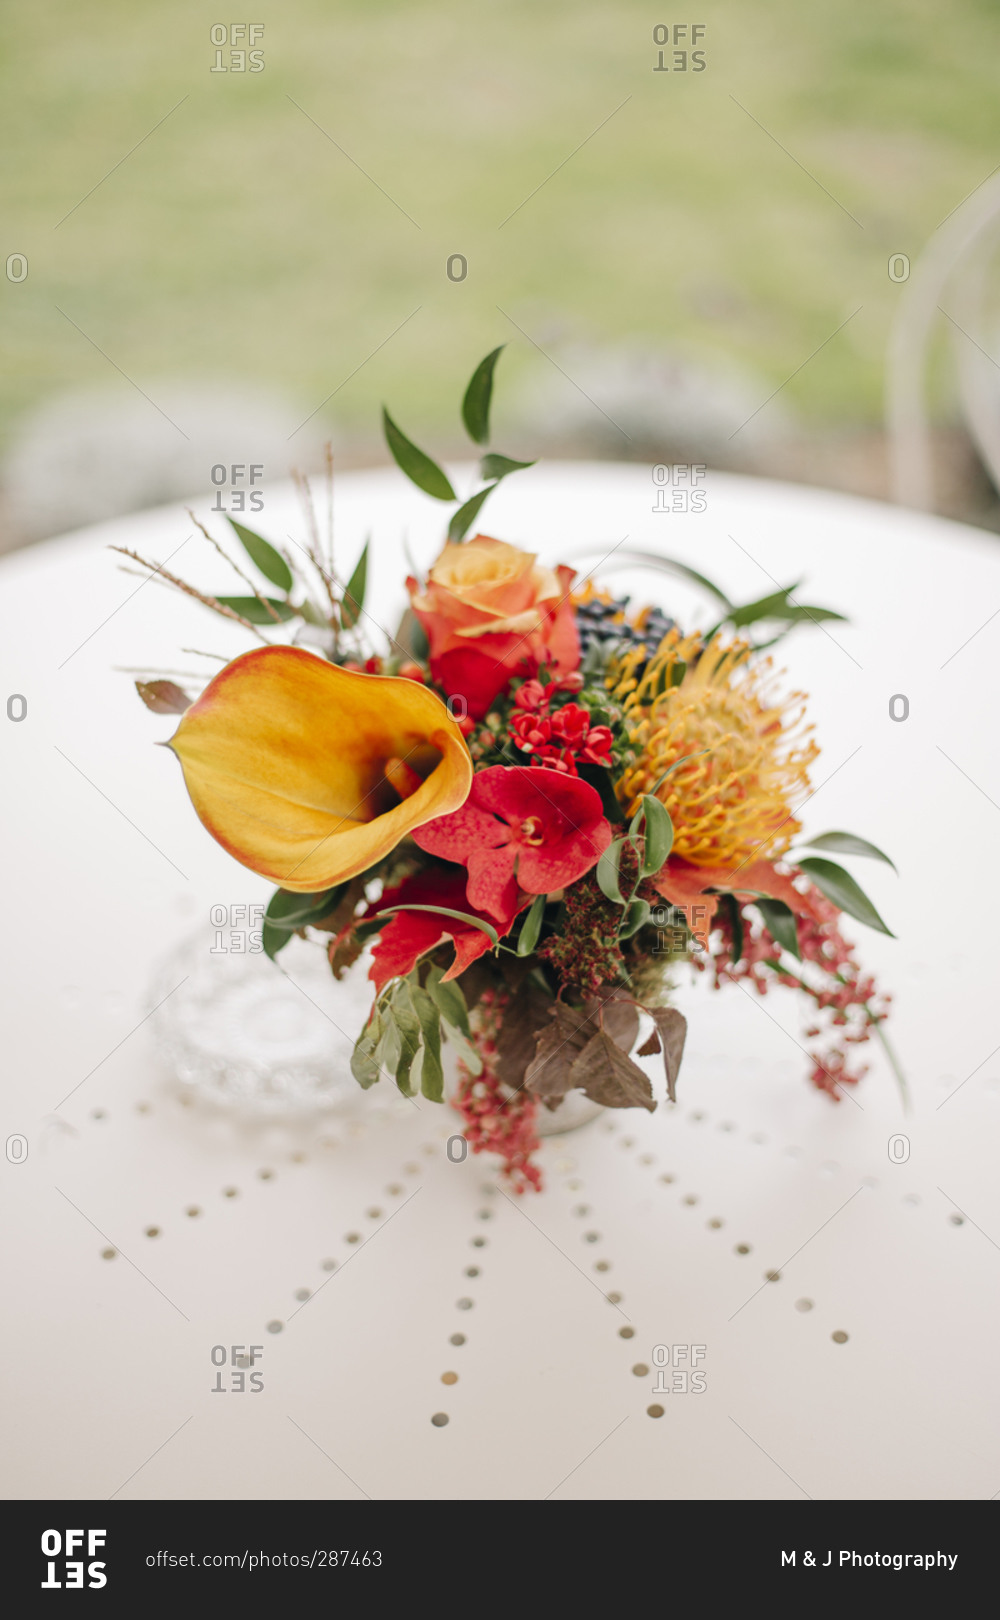 Fall floral arrangement for outdoor wedding